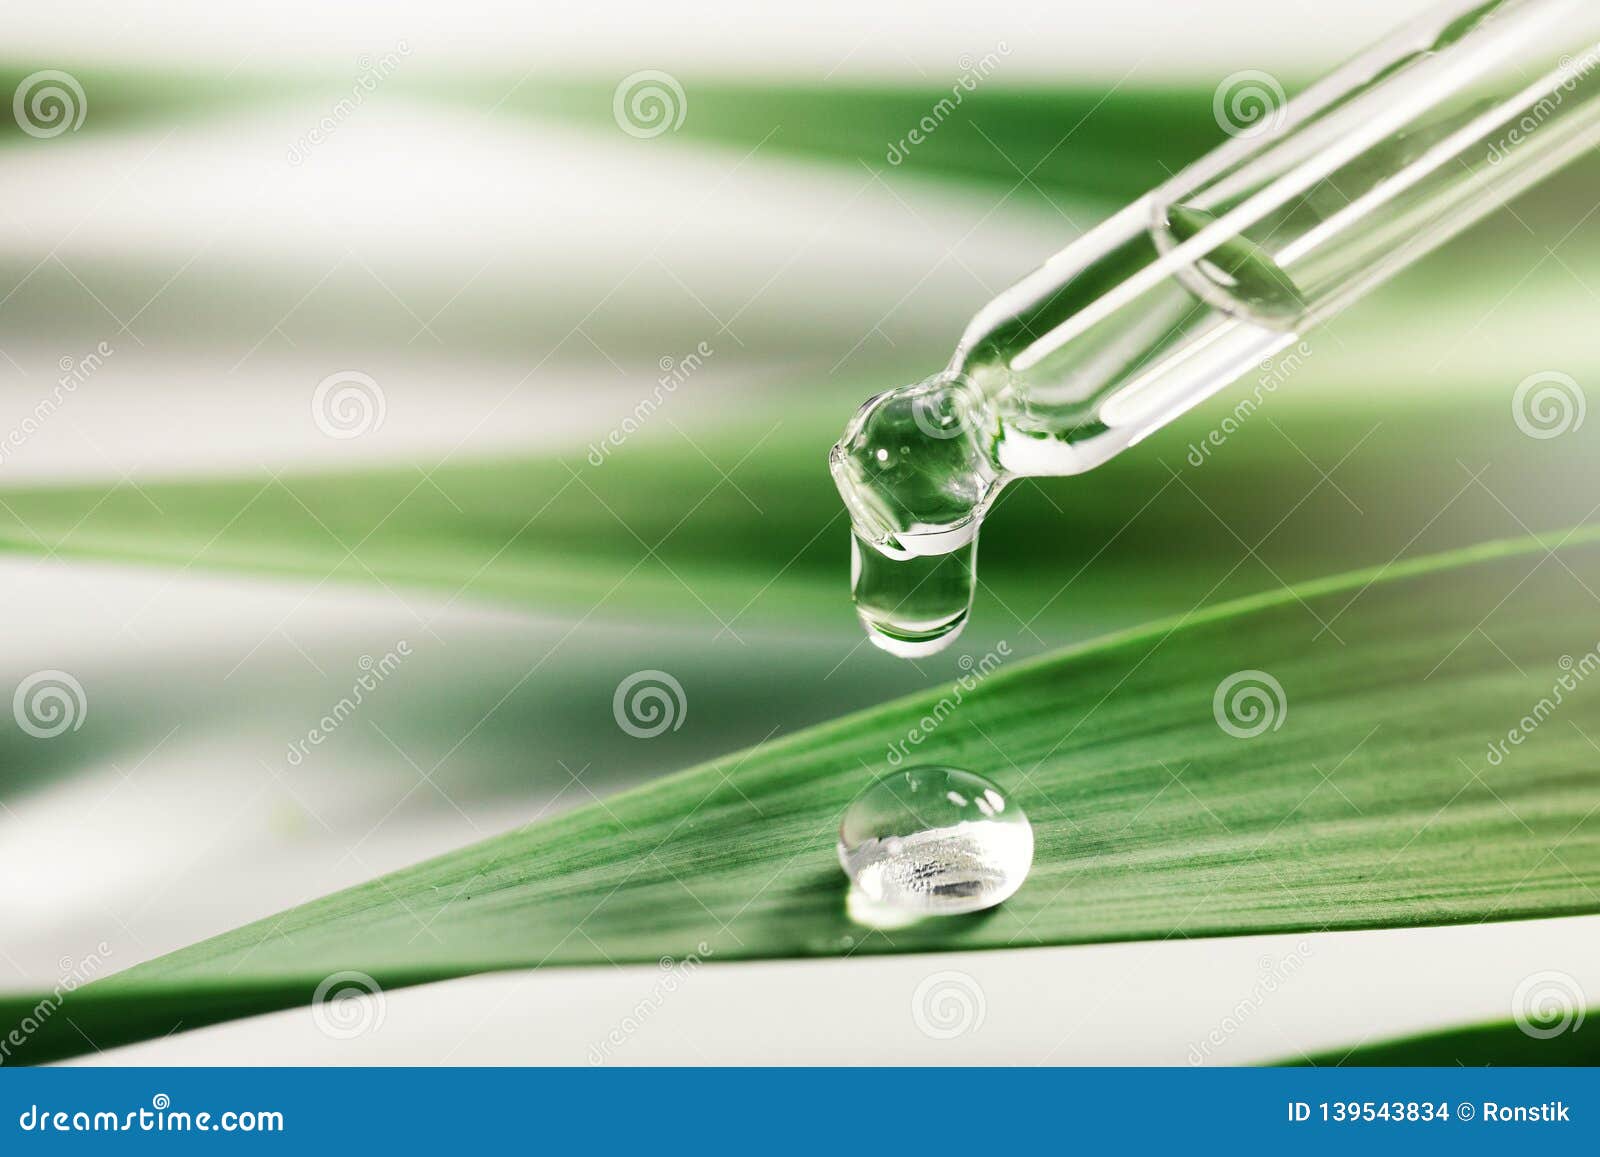 essential oil drop on green leaf. spa background